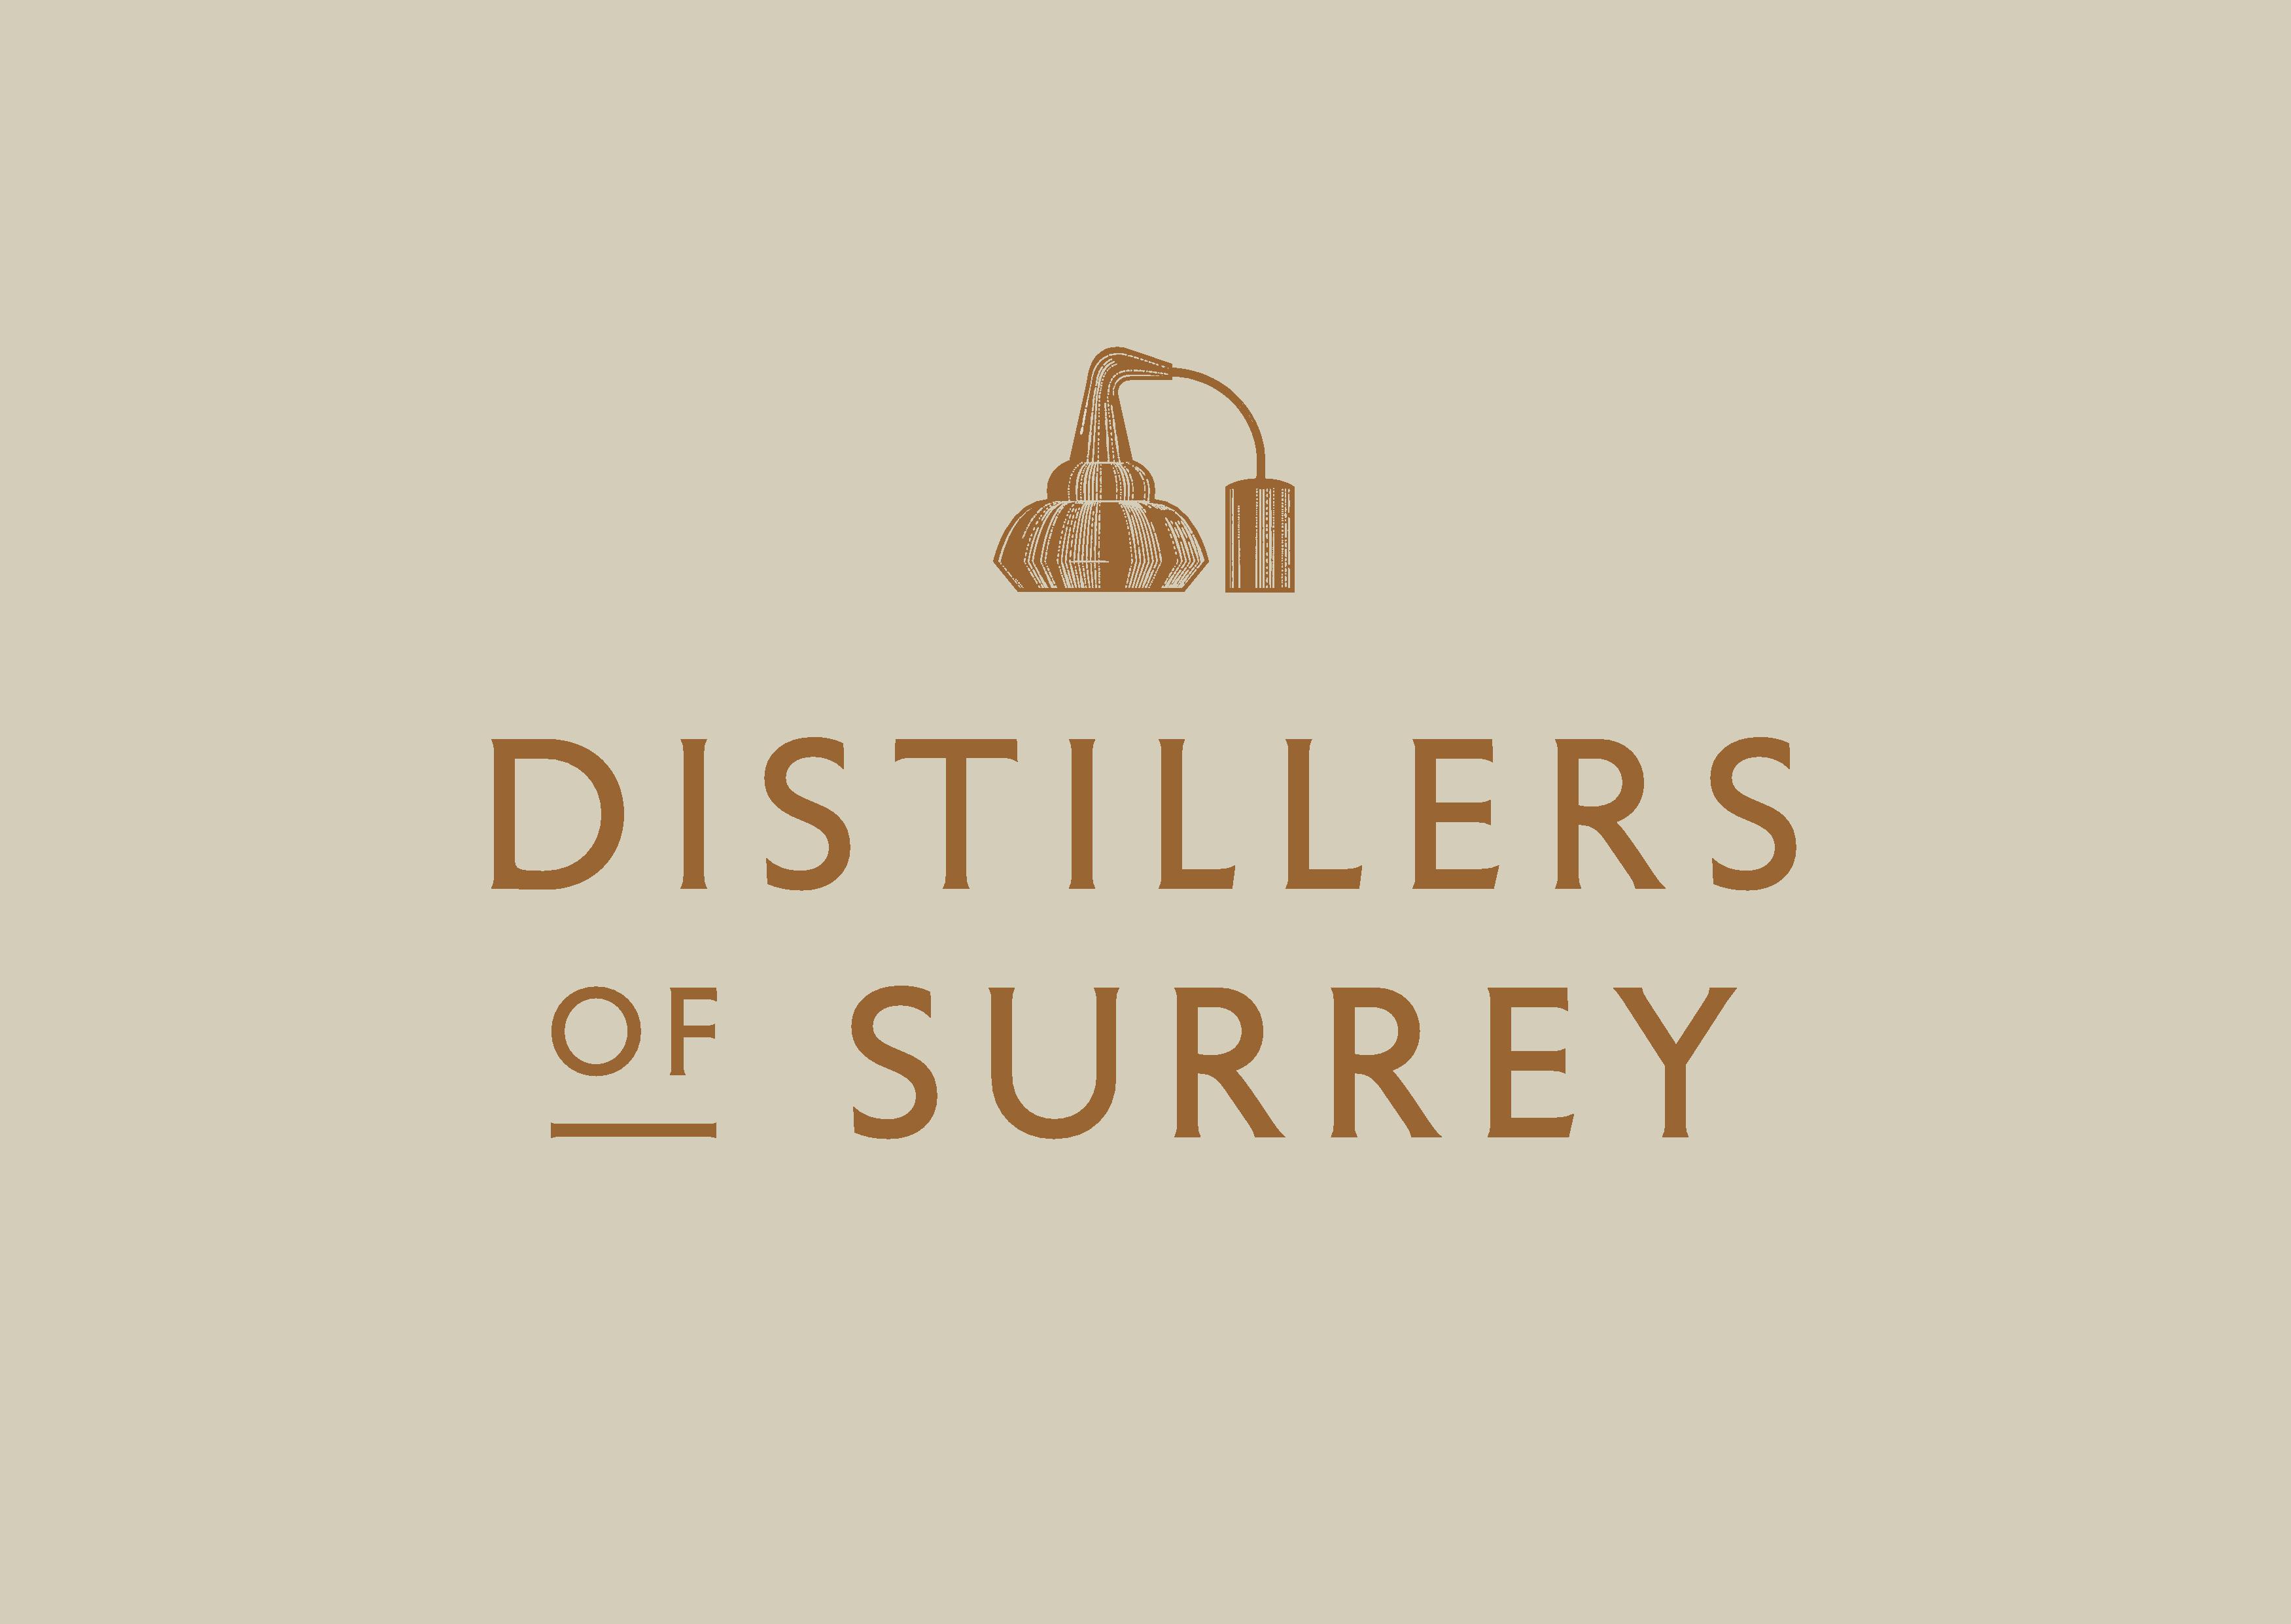 Distillers Of Surrey in 